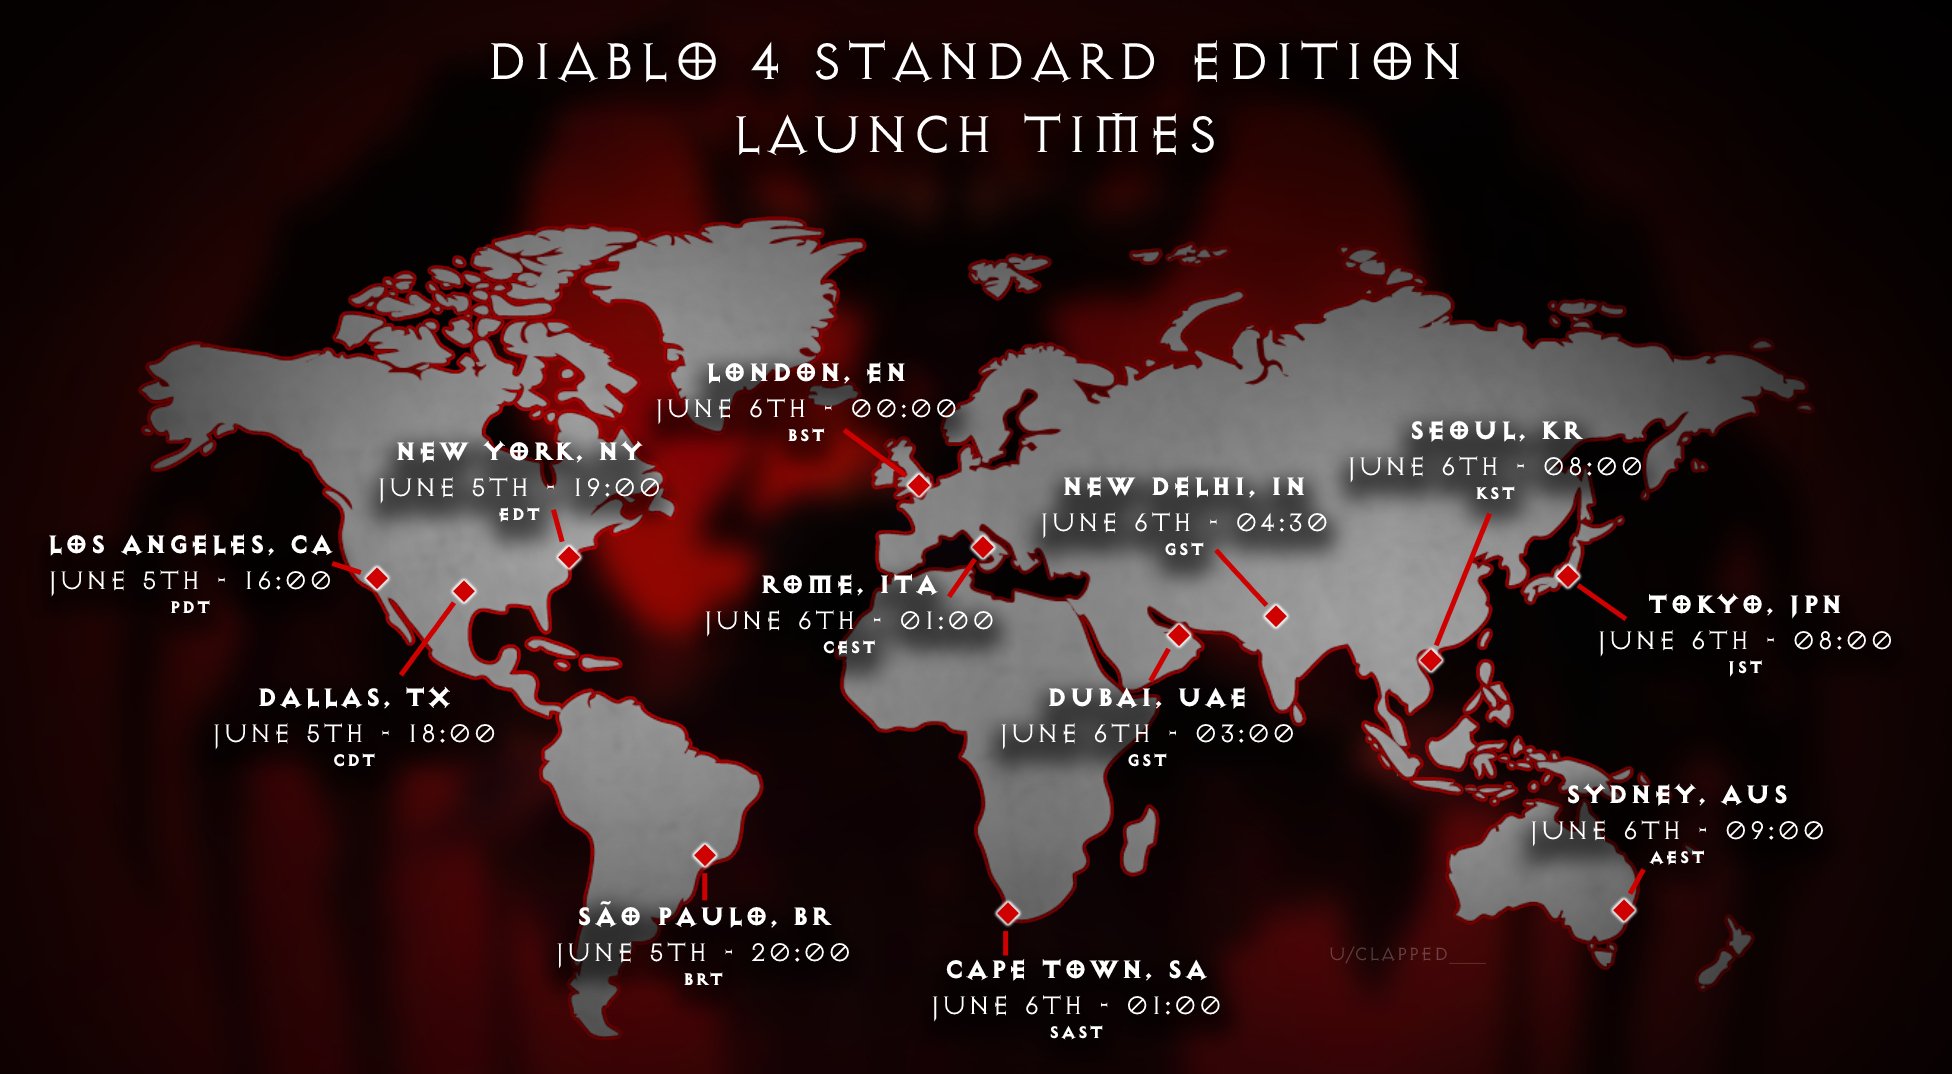 Diablo 4 Standard Edition Launch Times Map